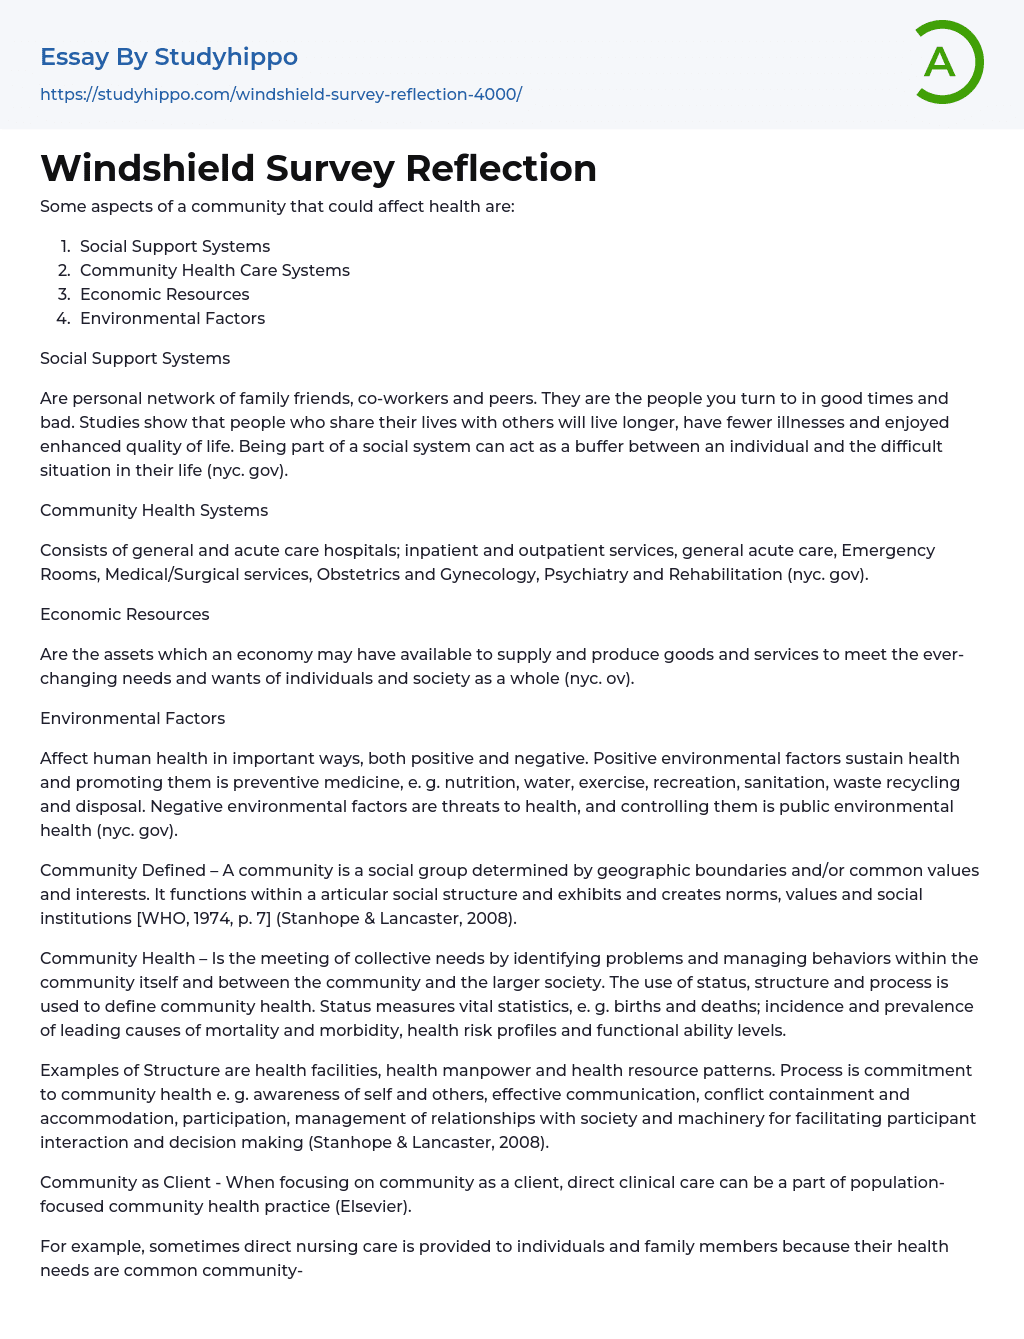 Windshield Survey Reflection Essay Example